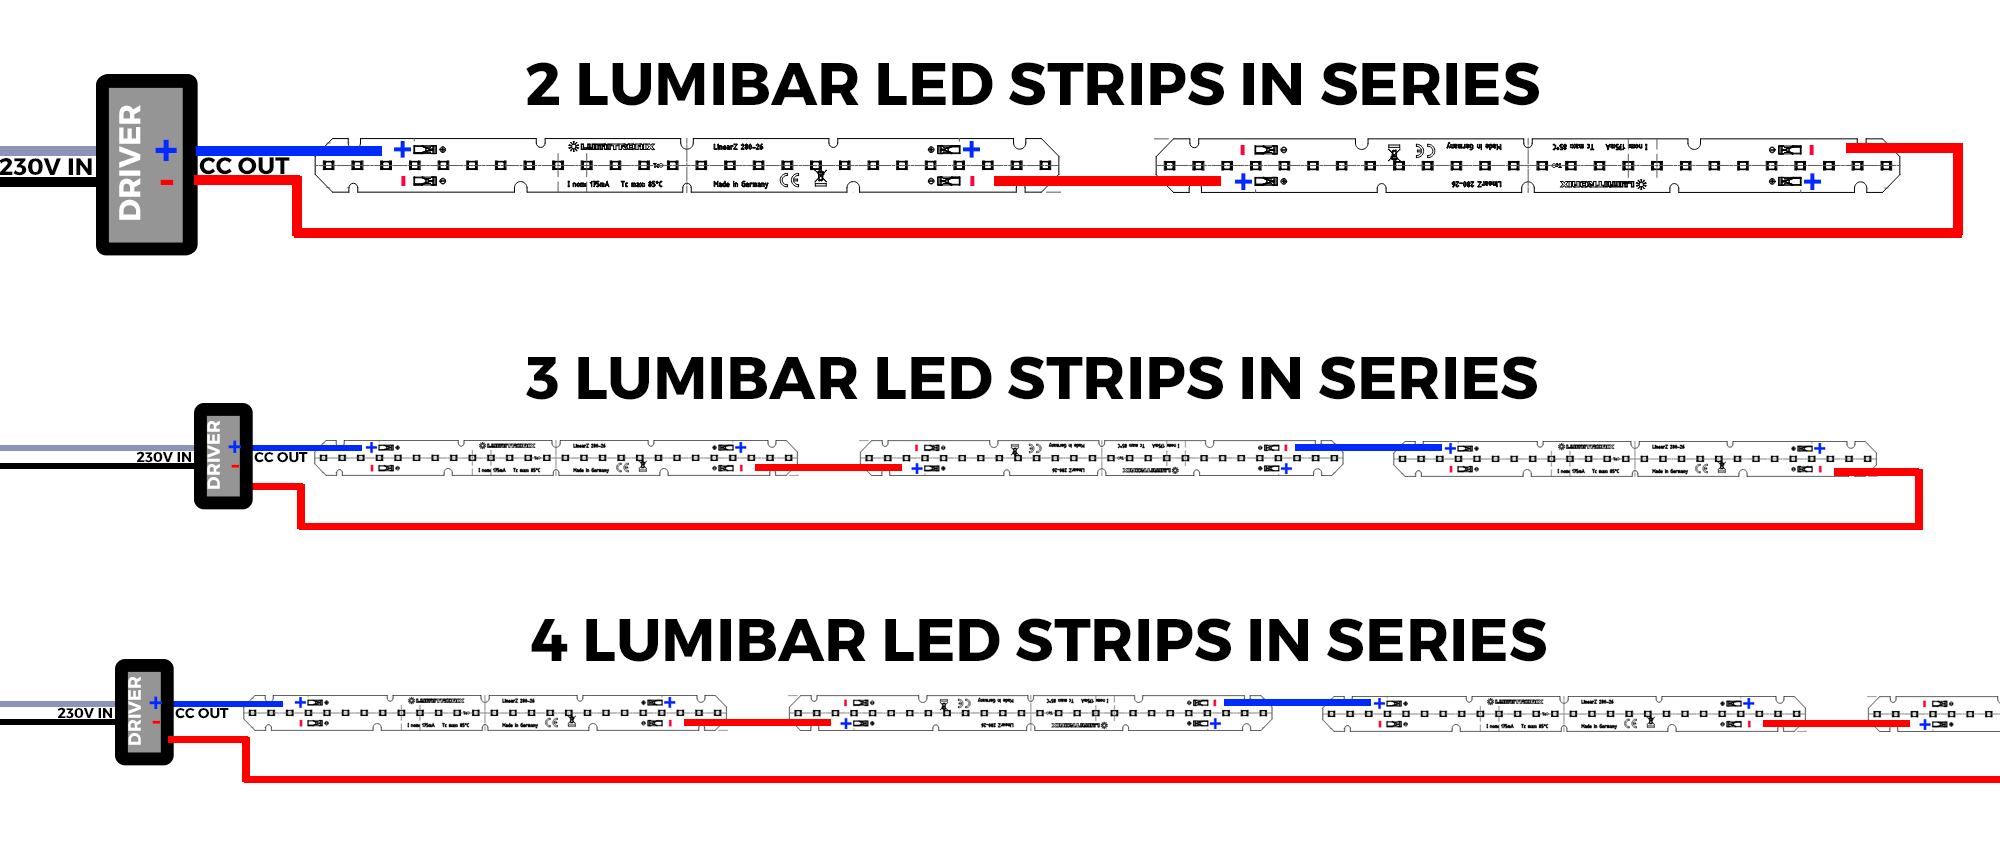 LinearZ LED strip Series connection